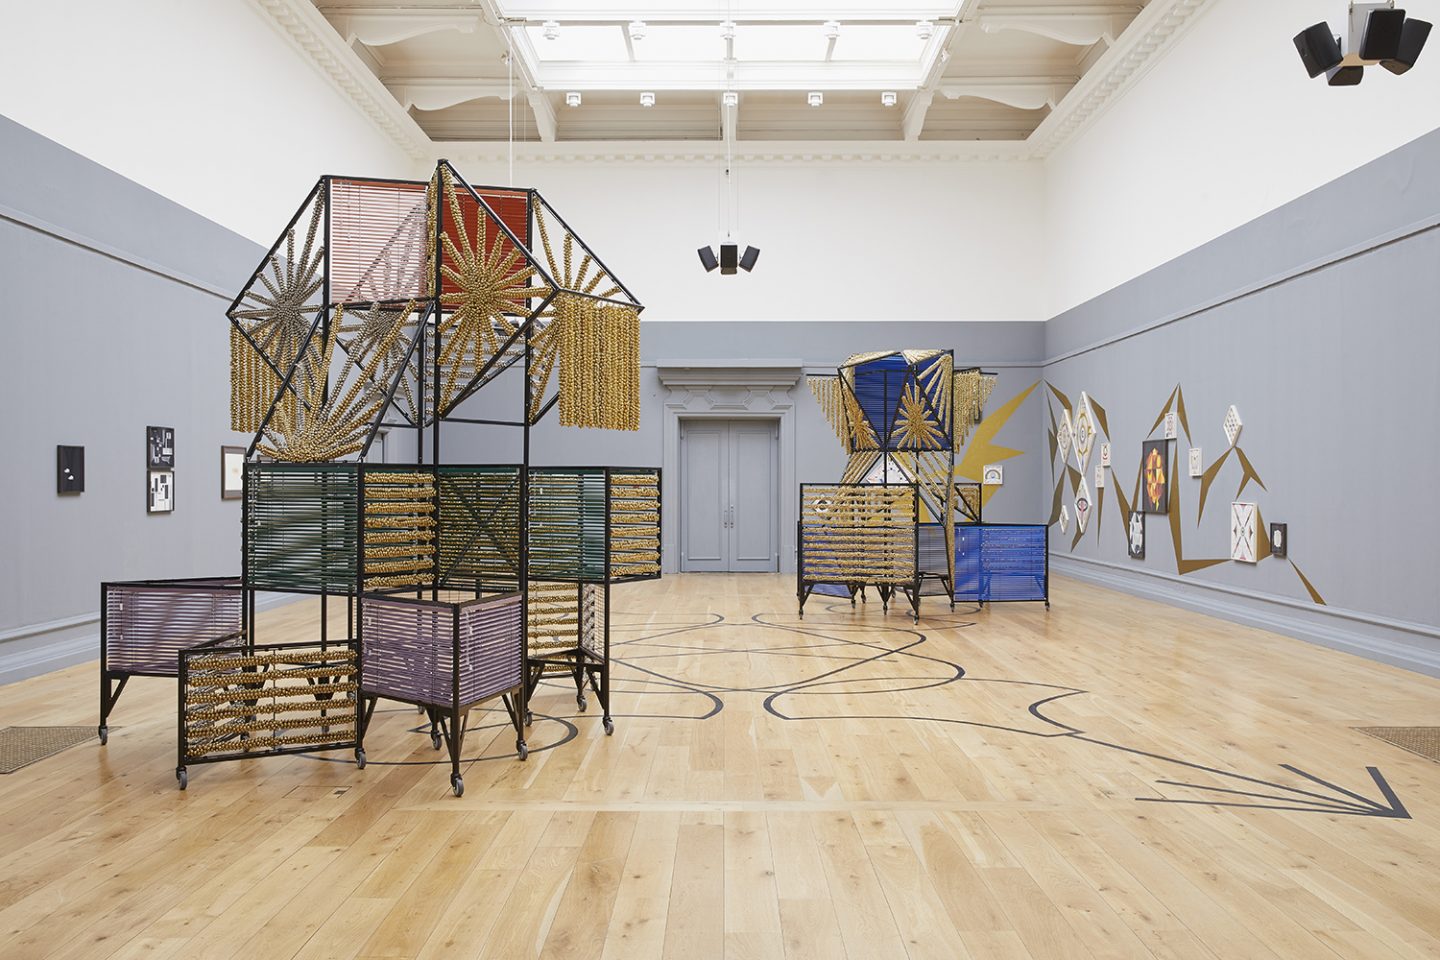 Installation view of Haegue Yang: Tracing Movement at the South London Gallery, 2019.
